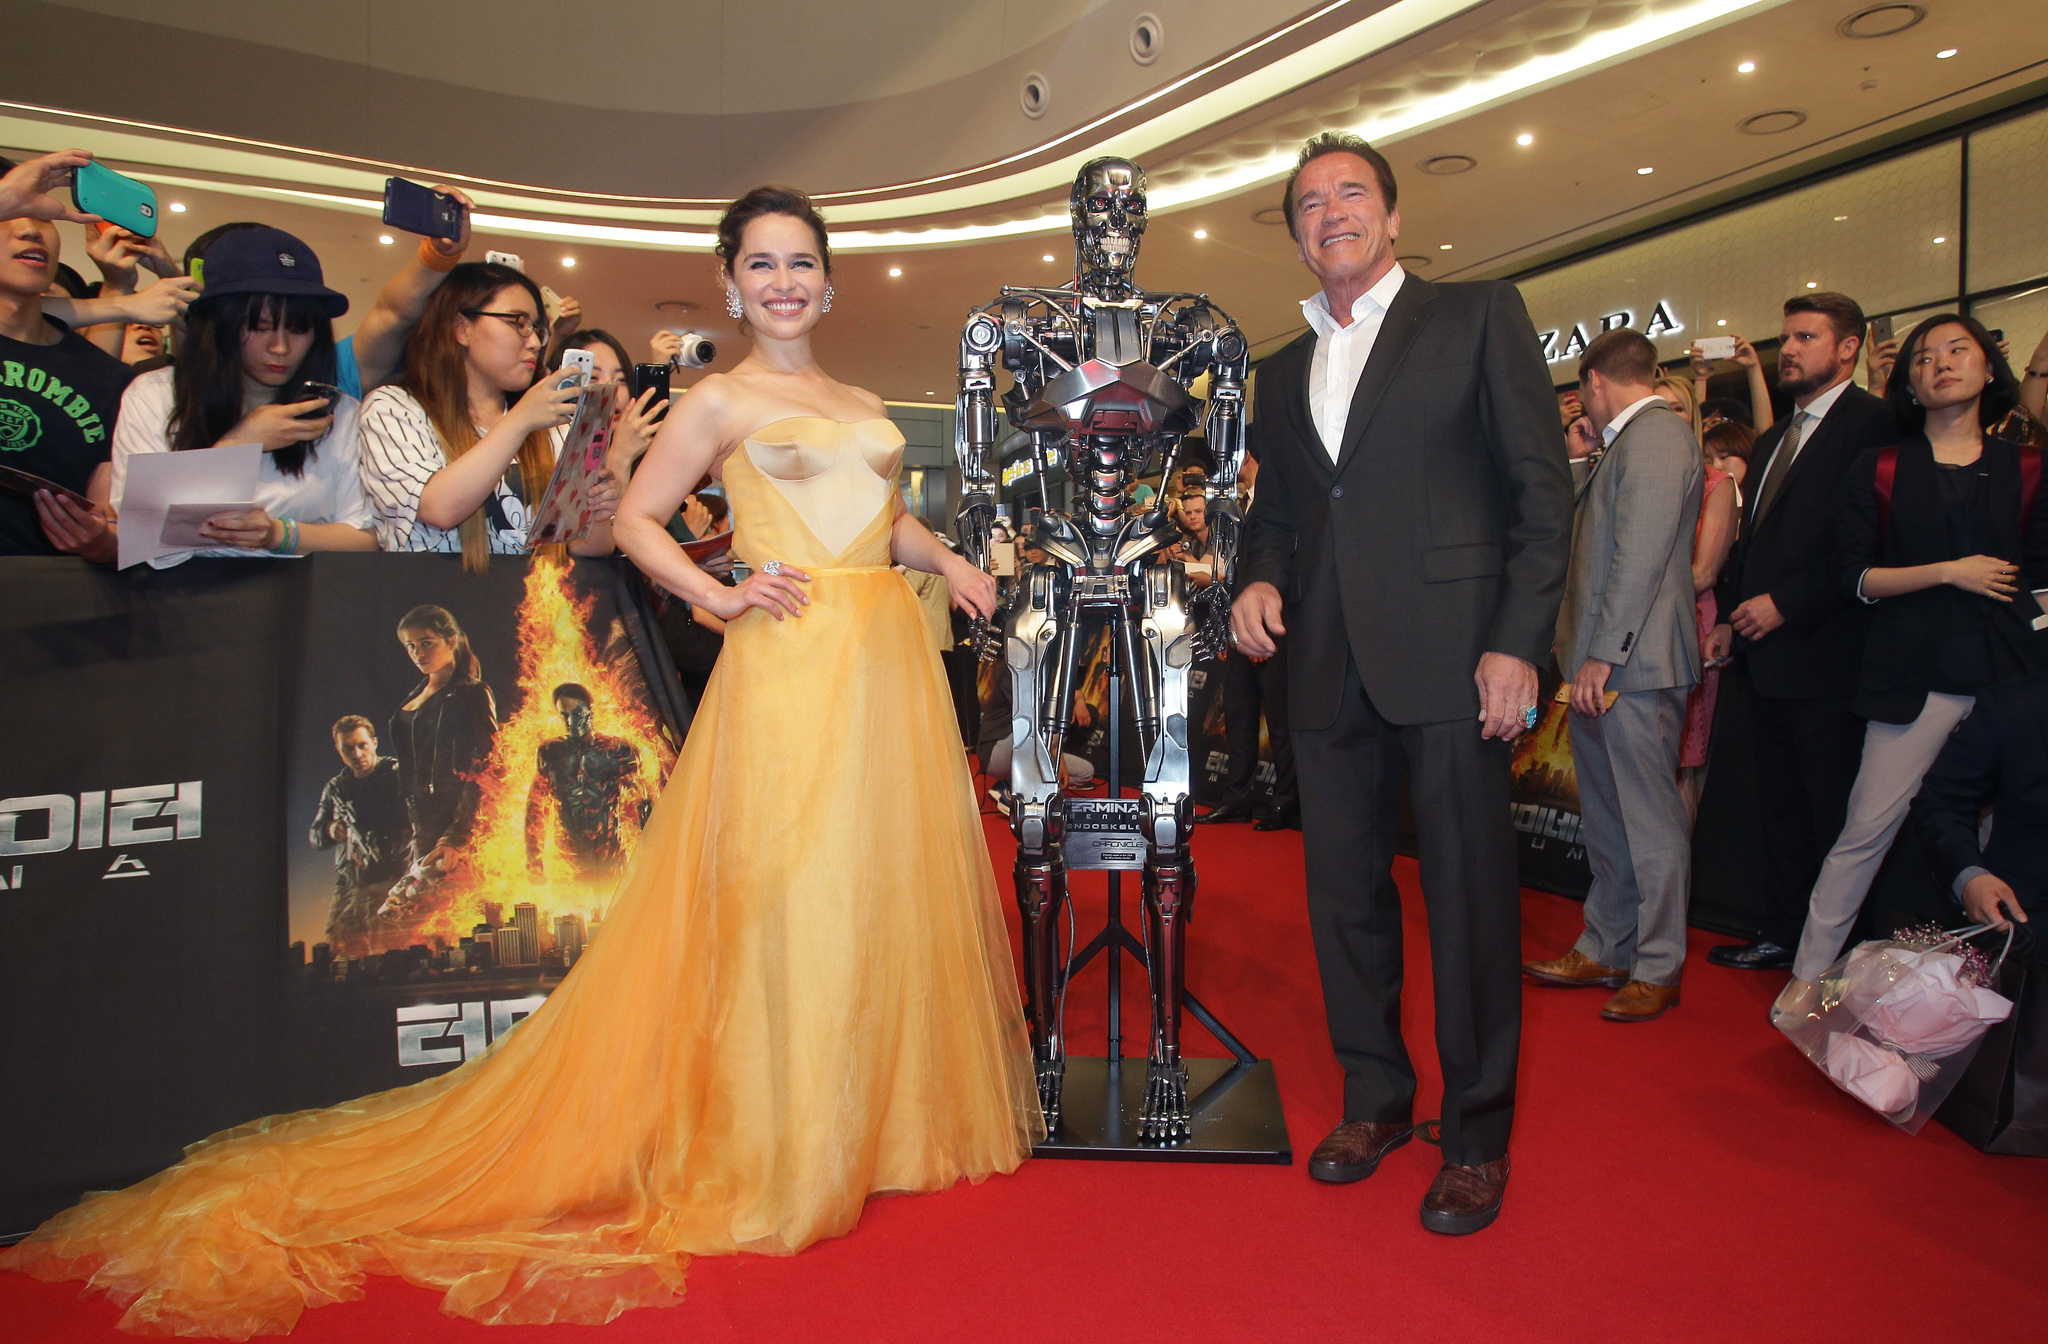 Arnold Schwarzenegger and Emilia Clarke at event of Terminator Genisys (2015)